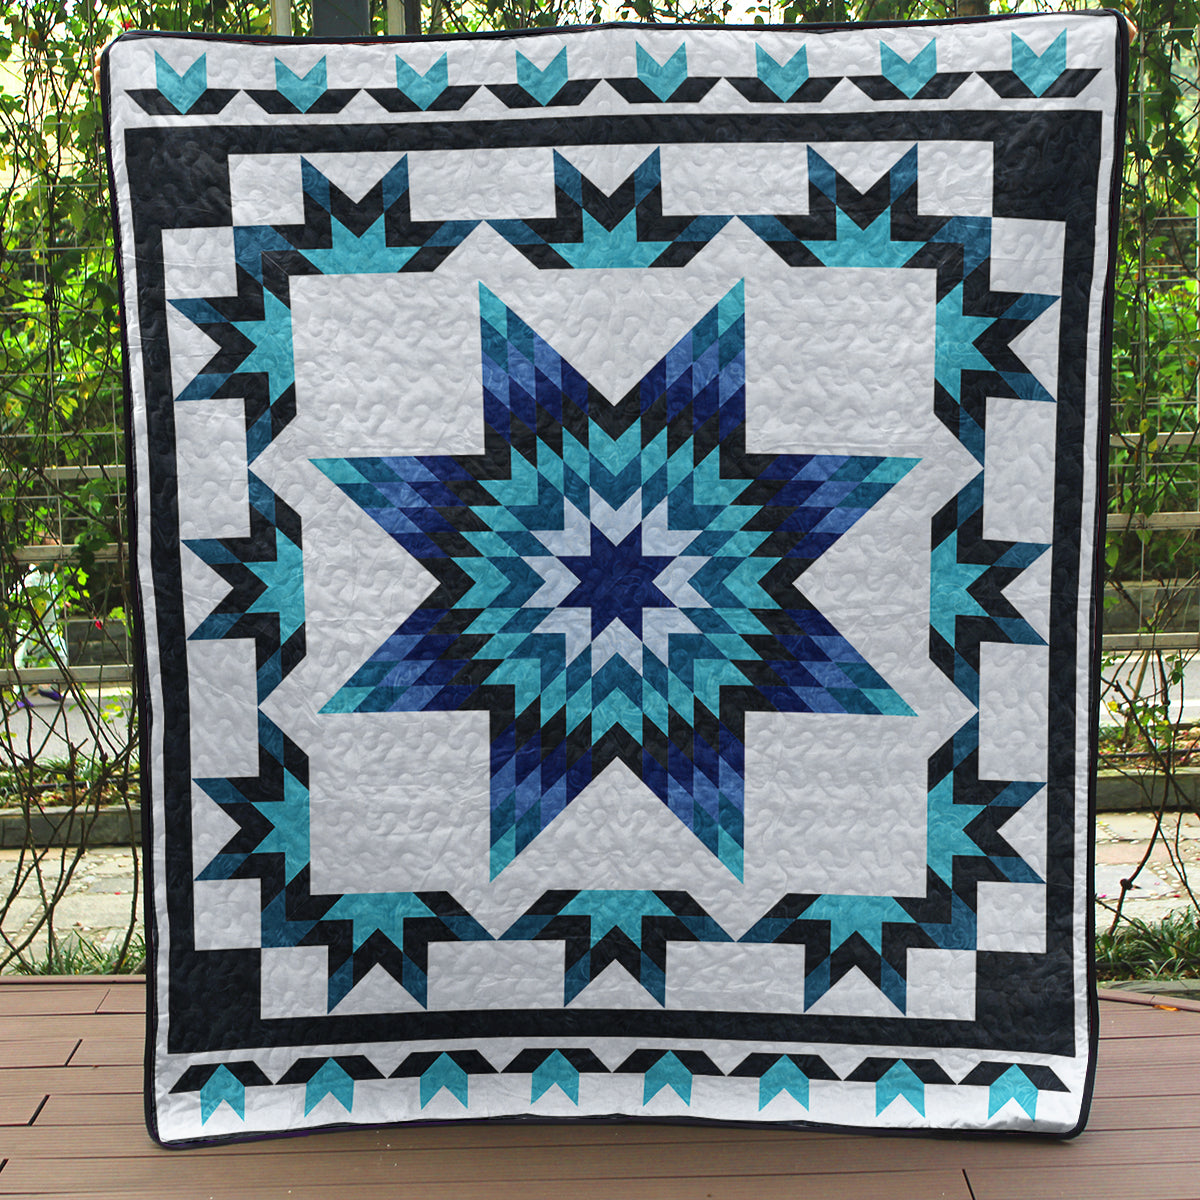 Native American Inspired Star Art Quilt HN270505M